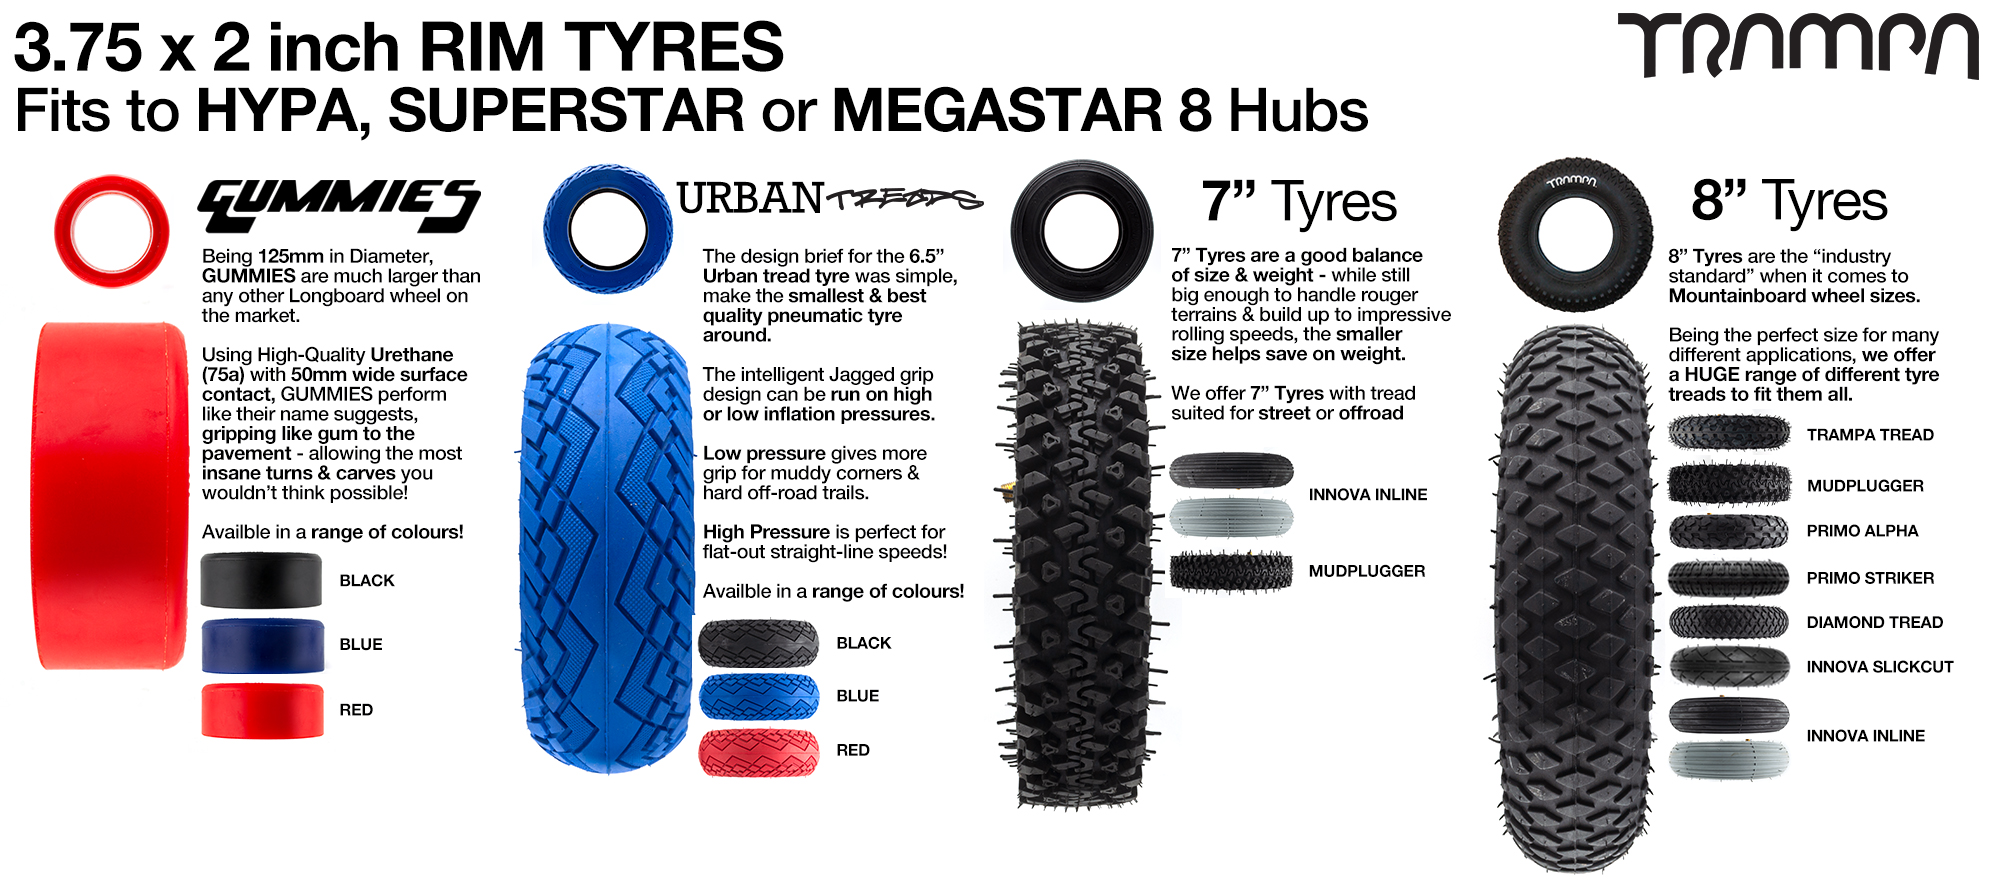 Tyre options for 3.75 x 2 Inch Rims - 5 Inch GUMMIES, 6 Inch URBANS. 7 Inch Pneumatics & All 8 inch Pneumatics